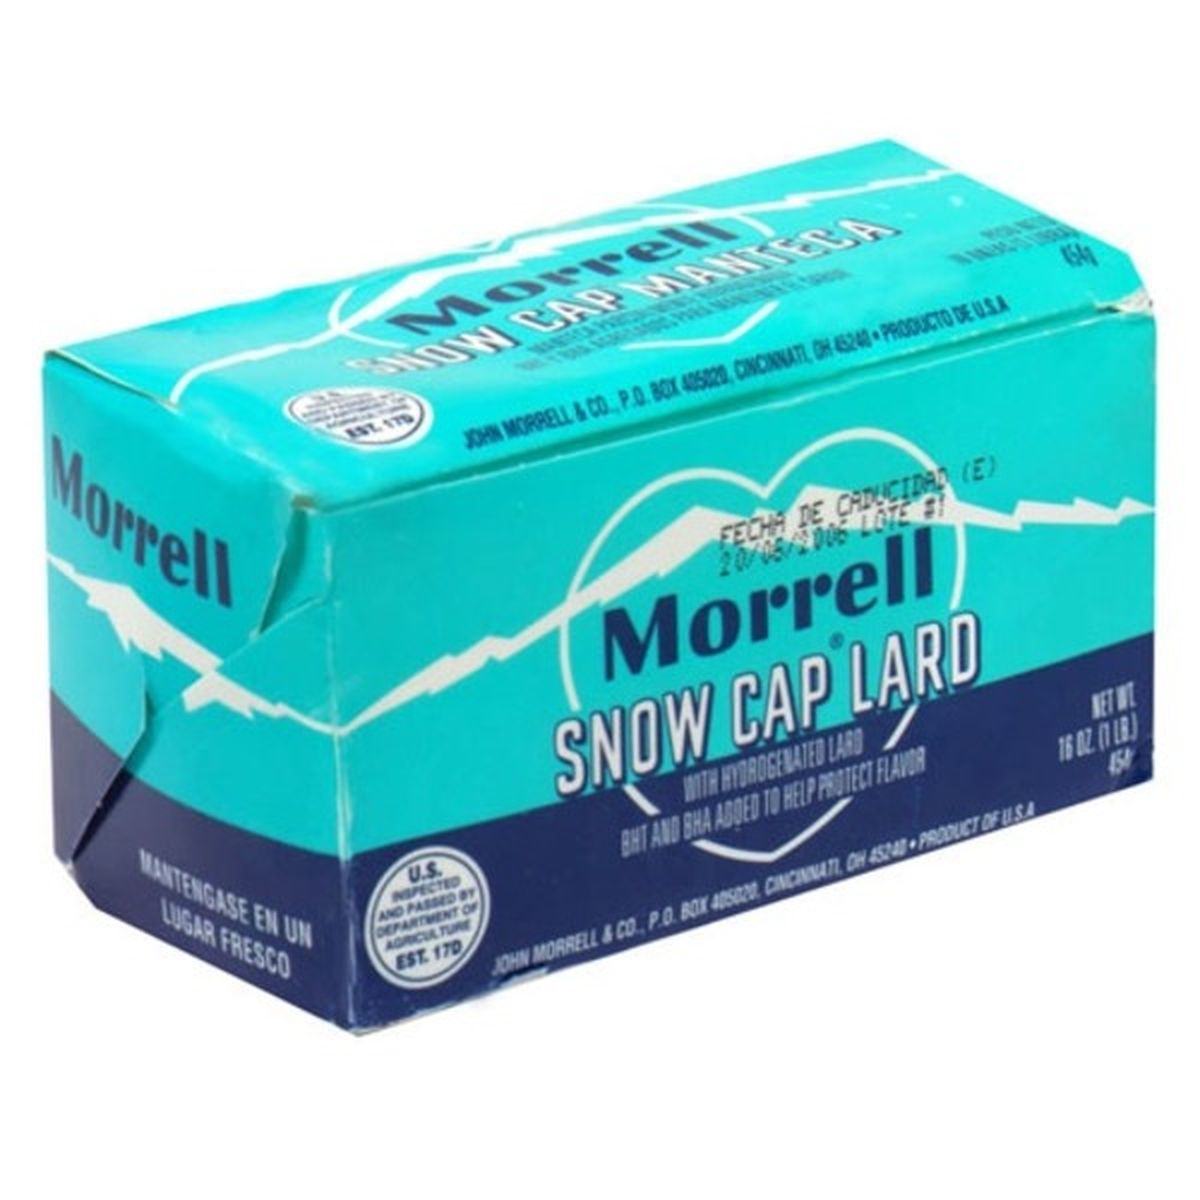 Calories in John Morrell Snow Cap Lard